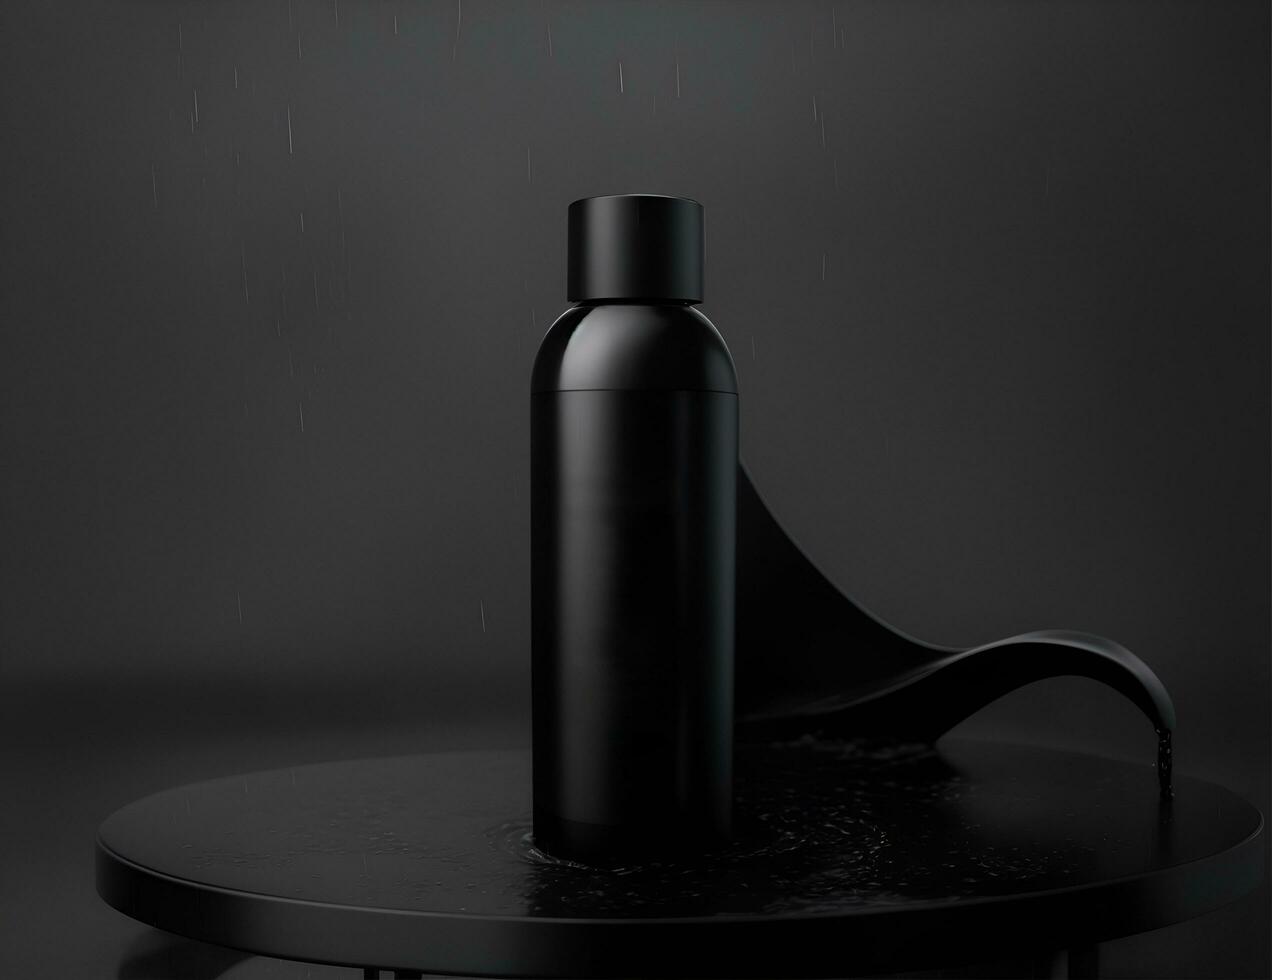 plain black bottle mockup for product advertising needs, AI generated. photo